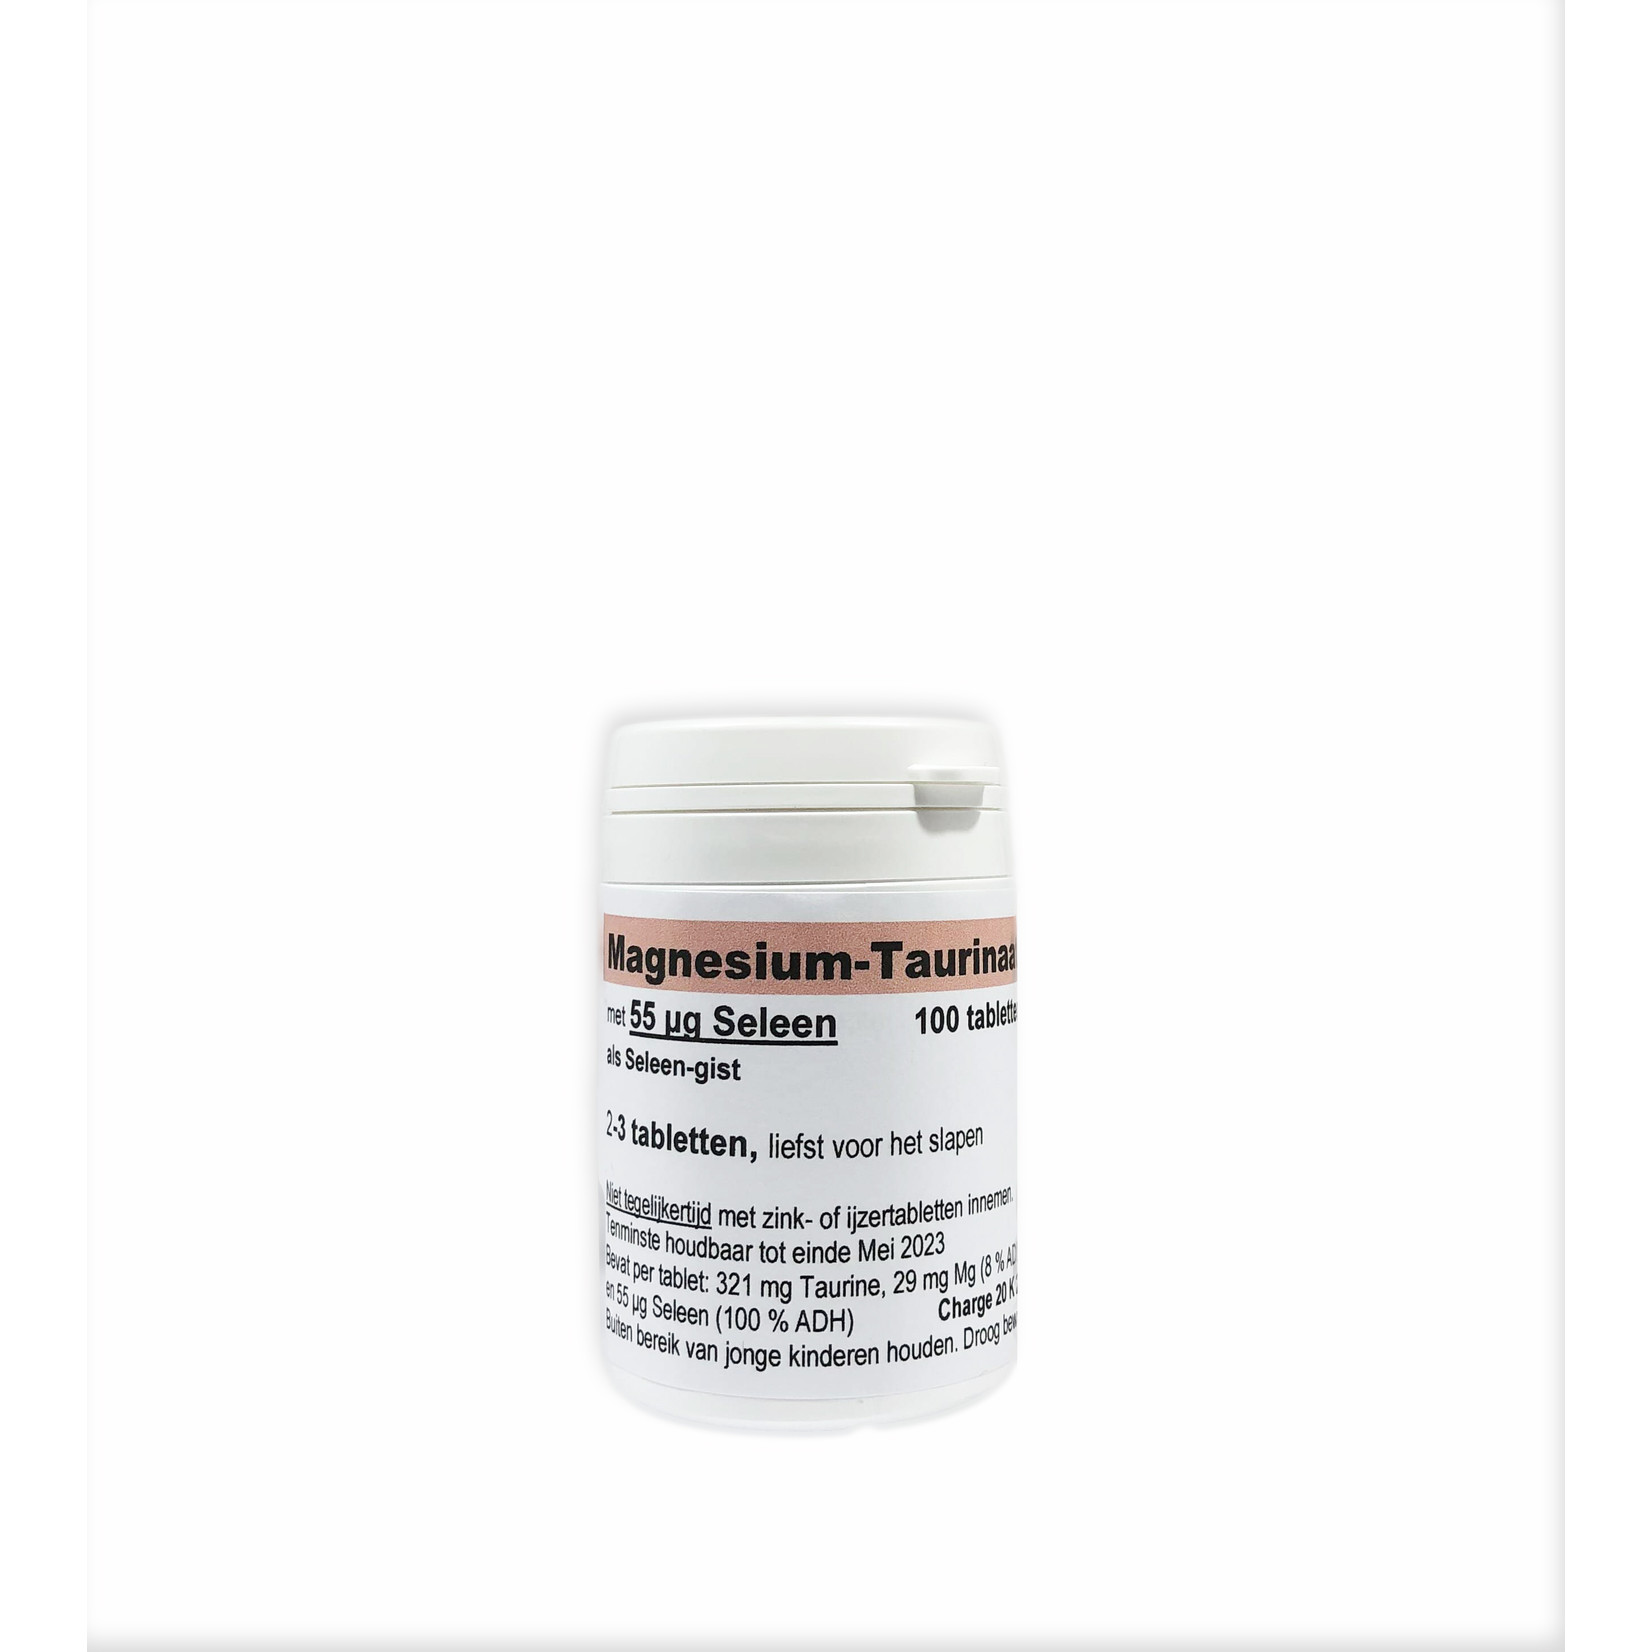 KIWI FARM Magnesium Taurinaat (100 tabletten)